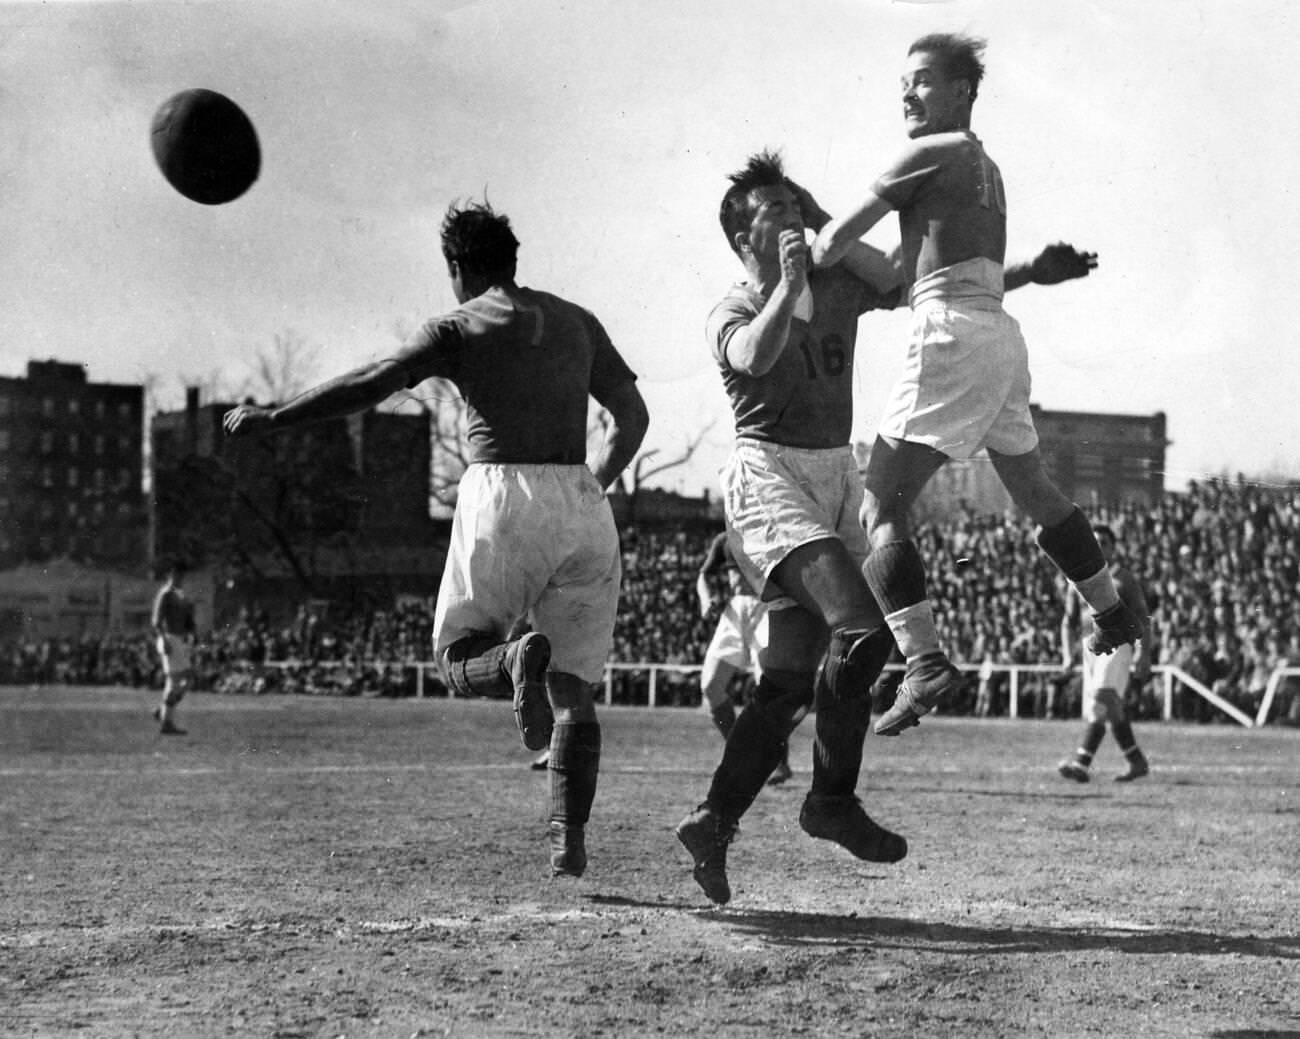 Brooklyn Vs Baltimore Soccer Match, 1948